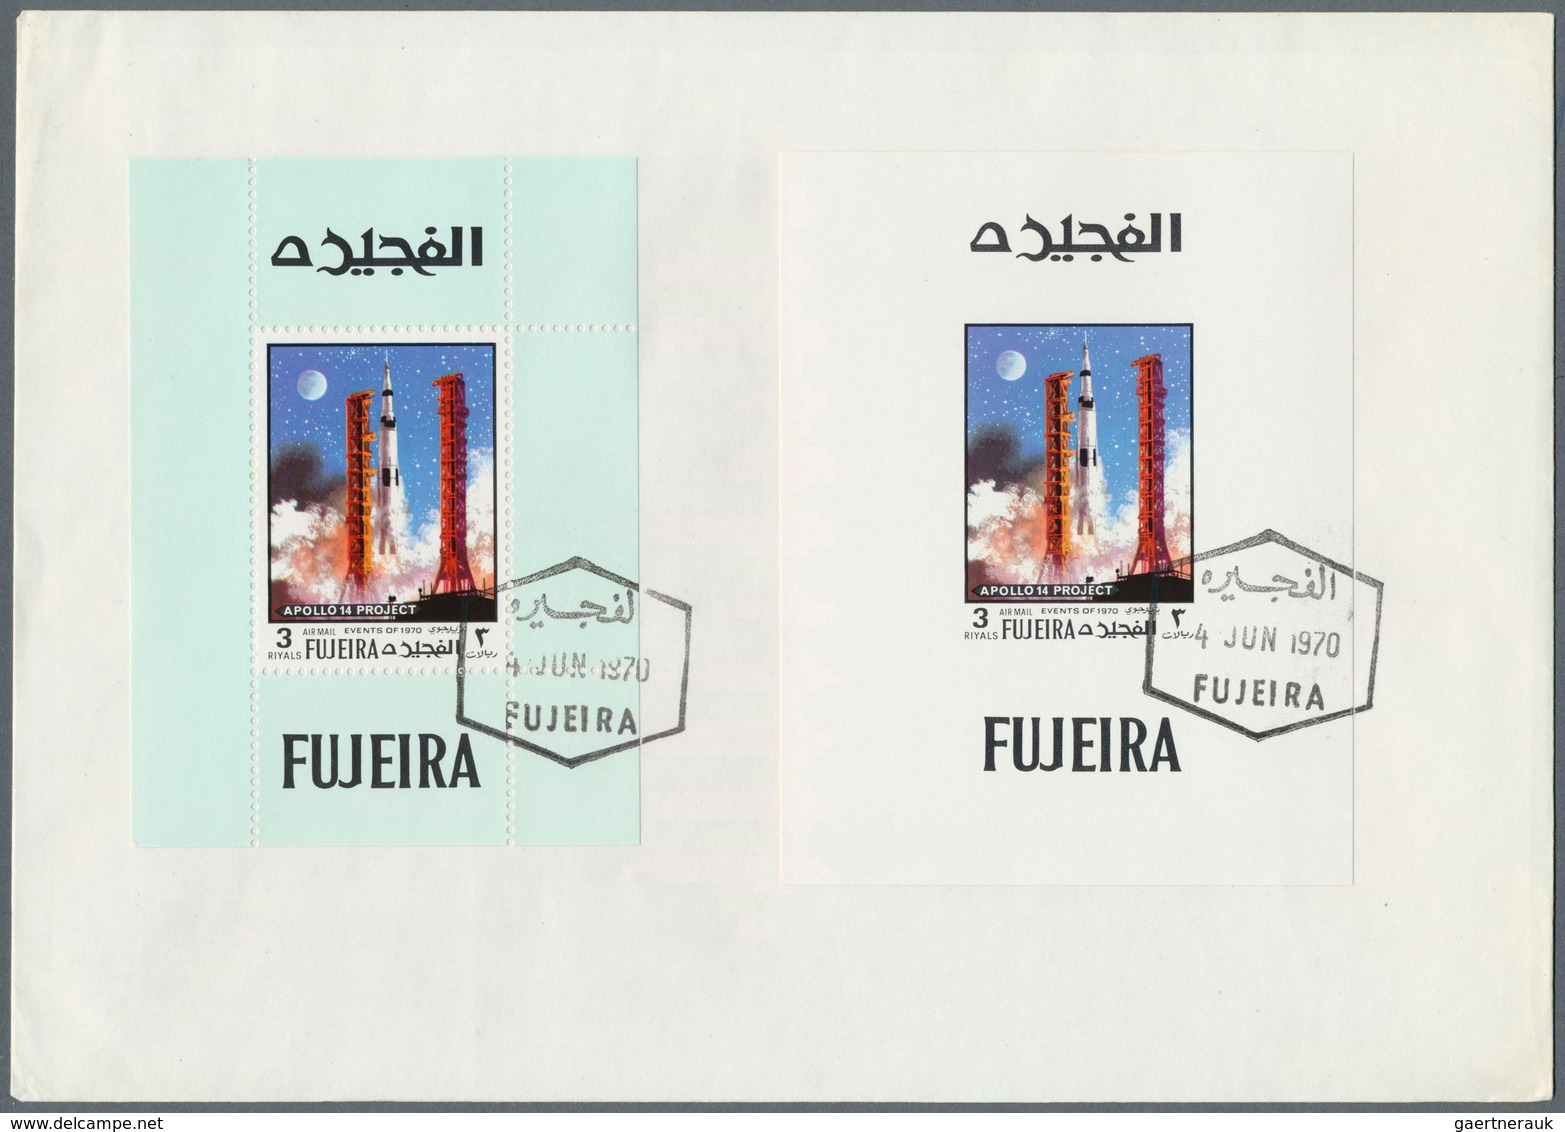 Thematik: Raumfahrt / astronautics: 1970/1972, "Space" issues of Fujeira, Ajman and Sharjah (incl. d